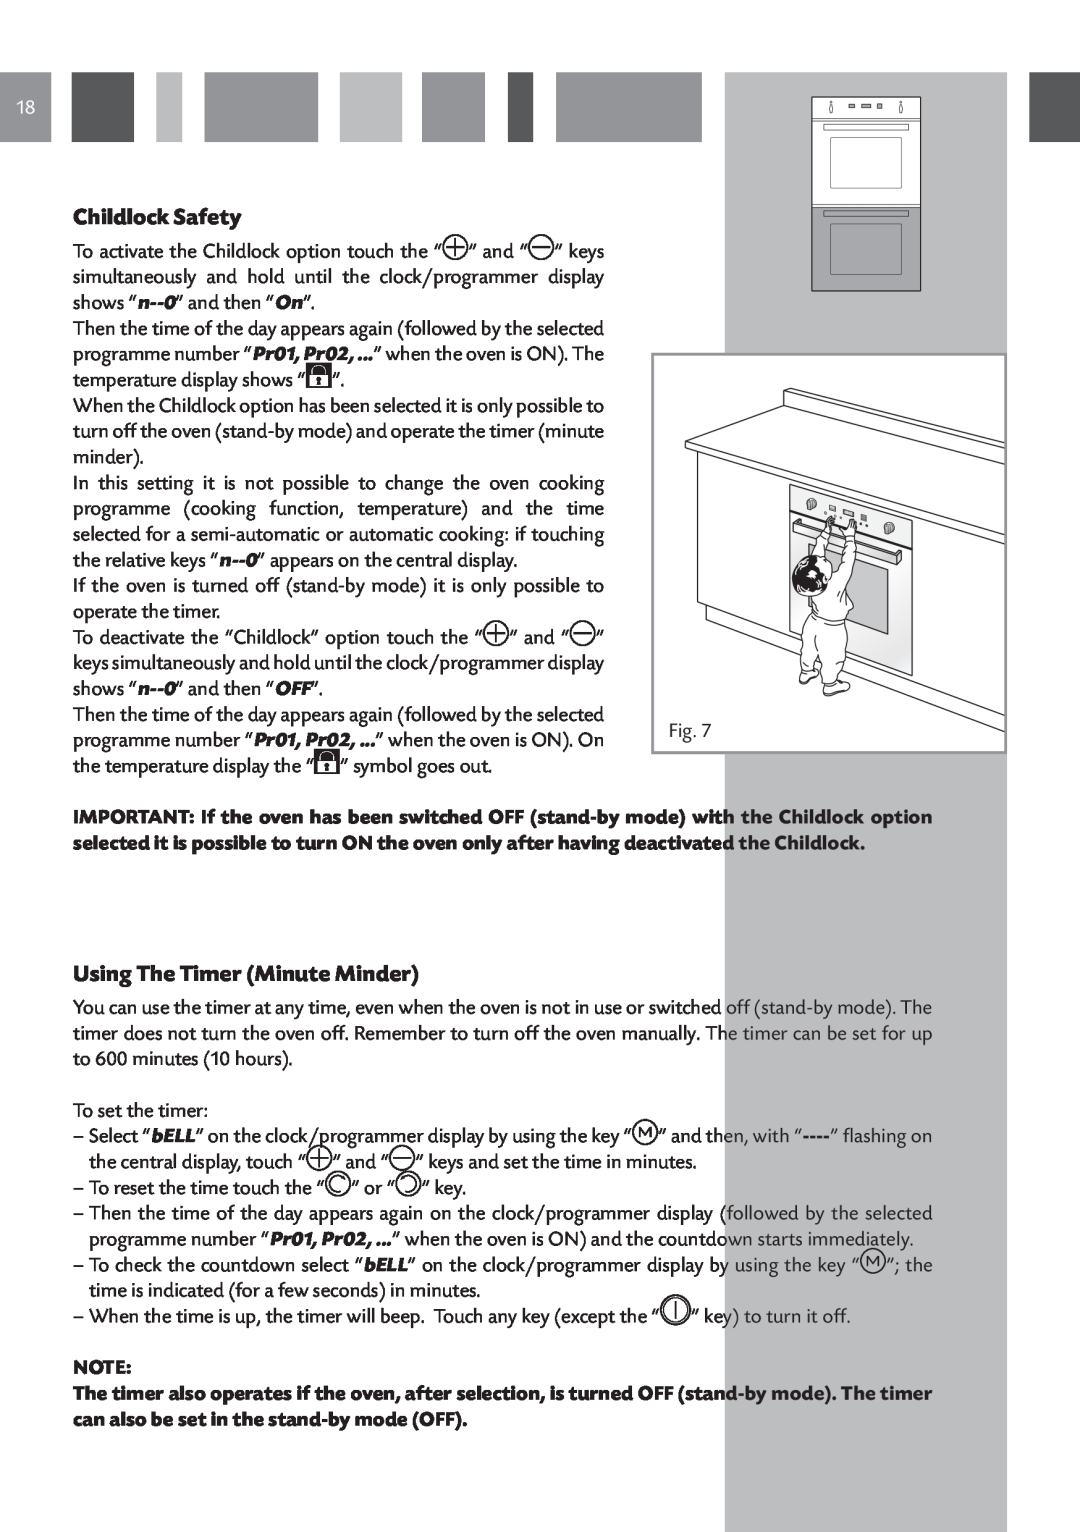 CDA 11Z6 manual Childlock Safety, Using The Timer Minute Minder 